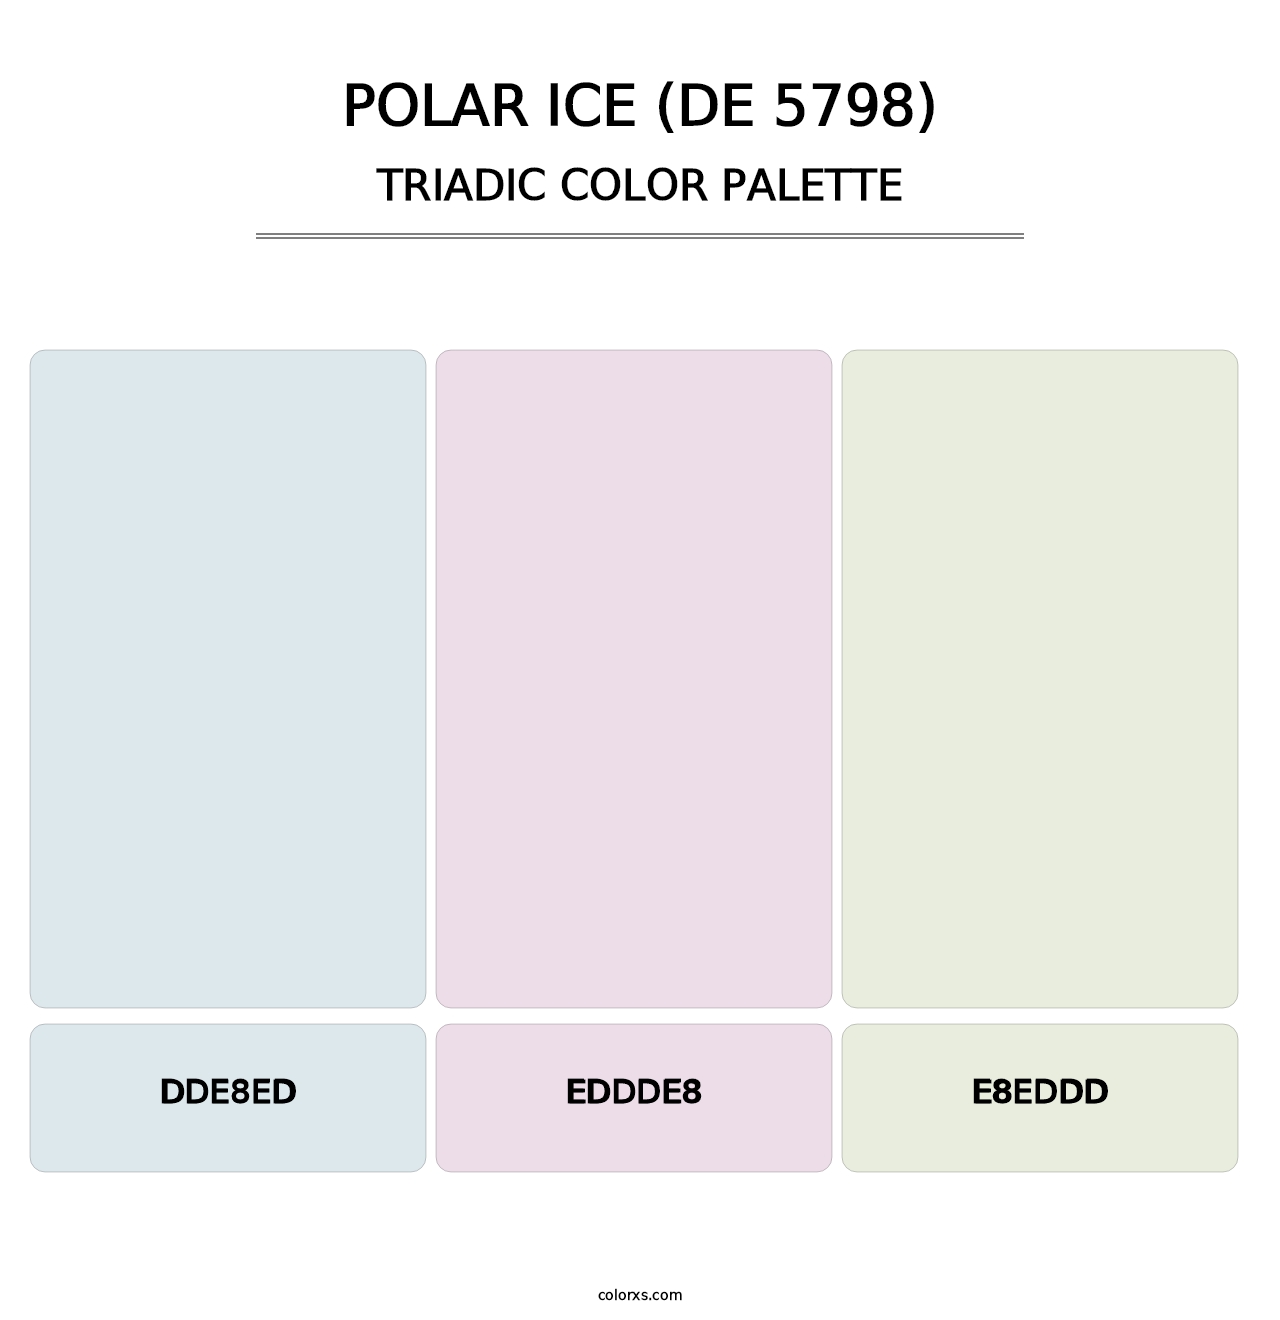 Polar Ice (DE 5798) - Triadic Color Palette